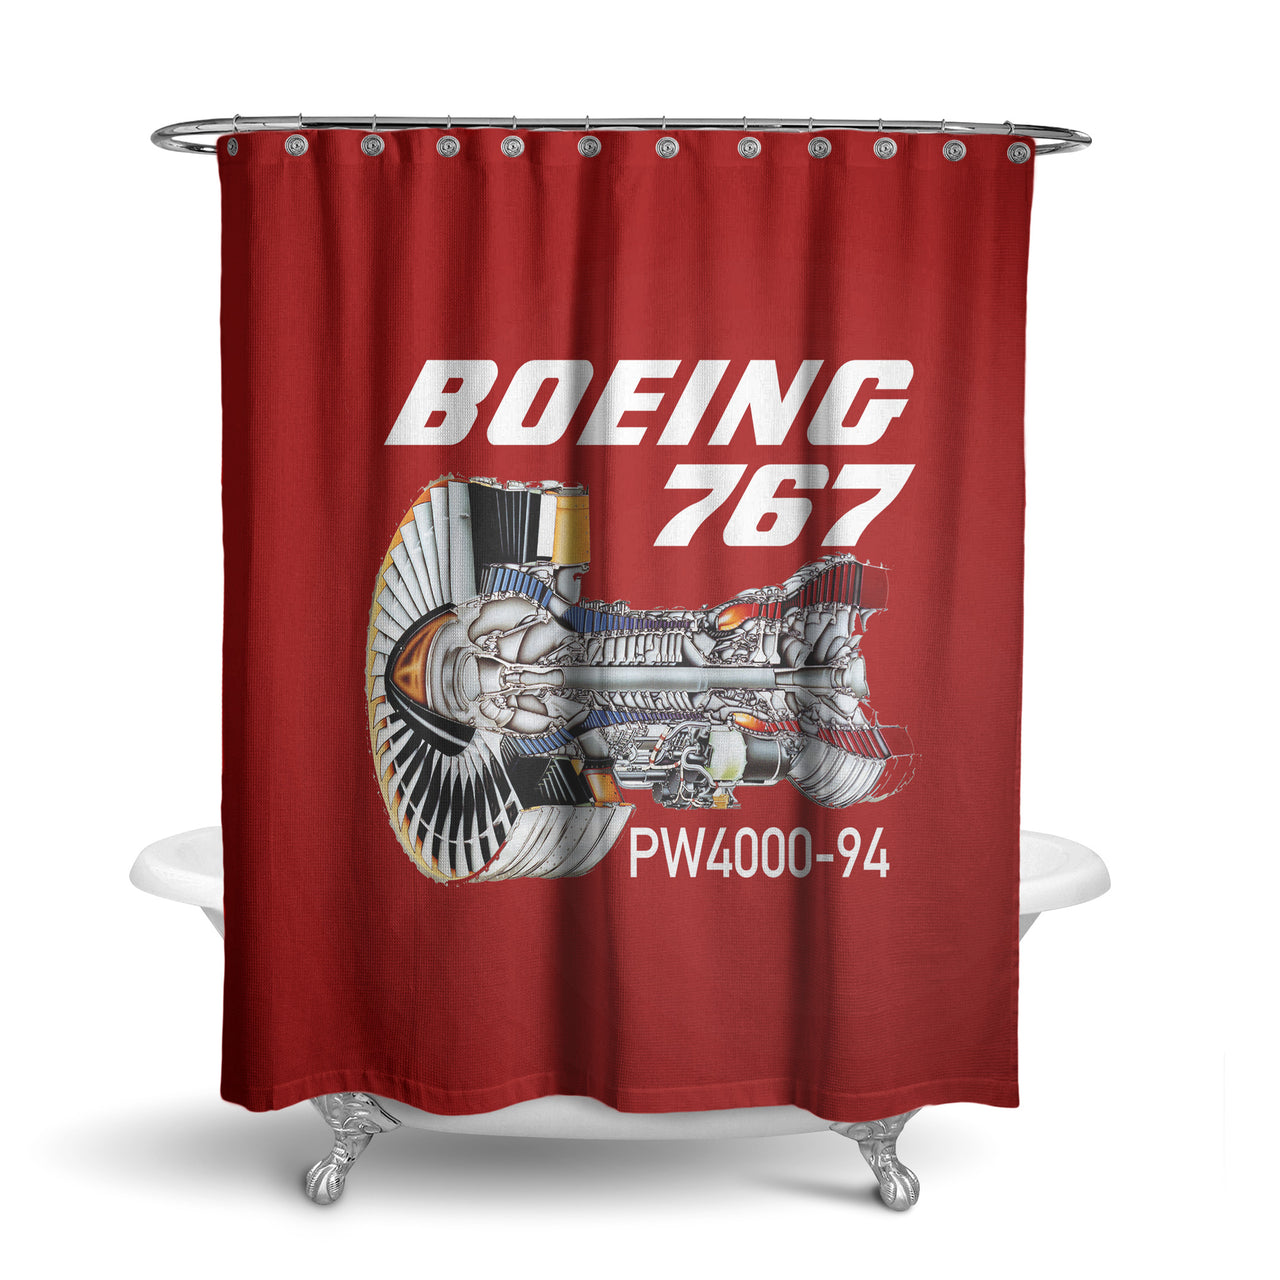 Boeing 767 Engine (PW4000-94) Designed Shower Curtains